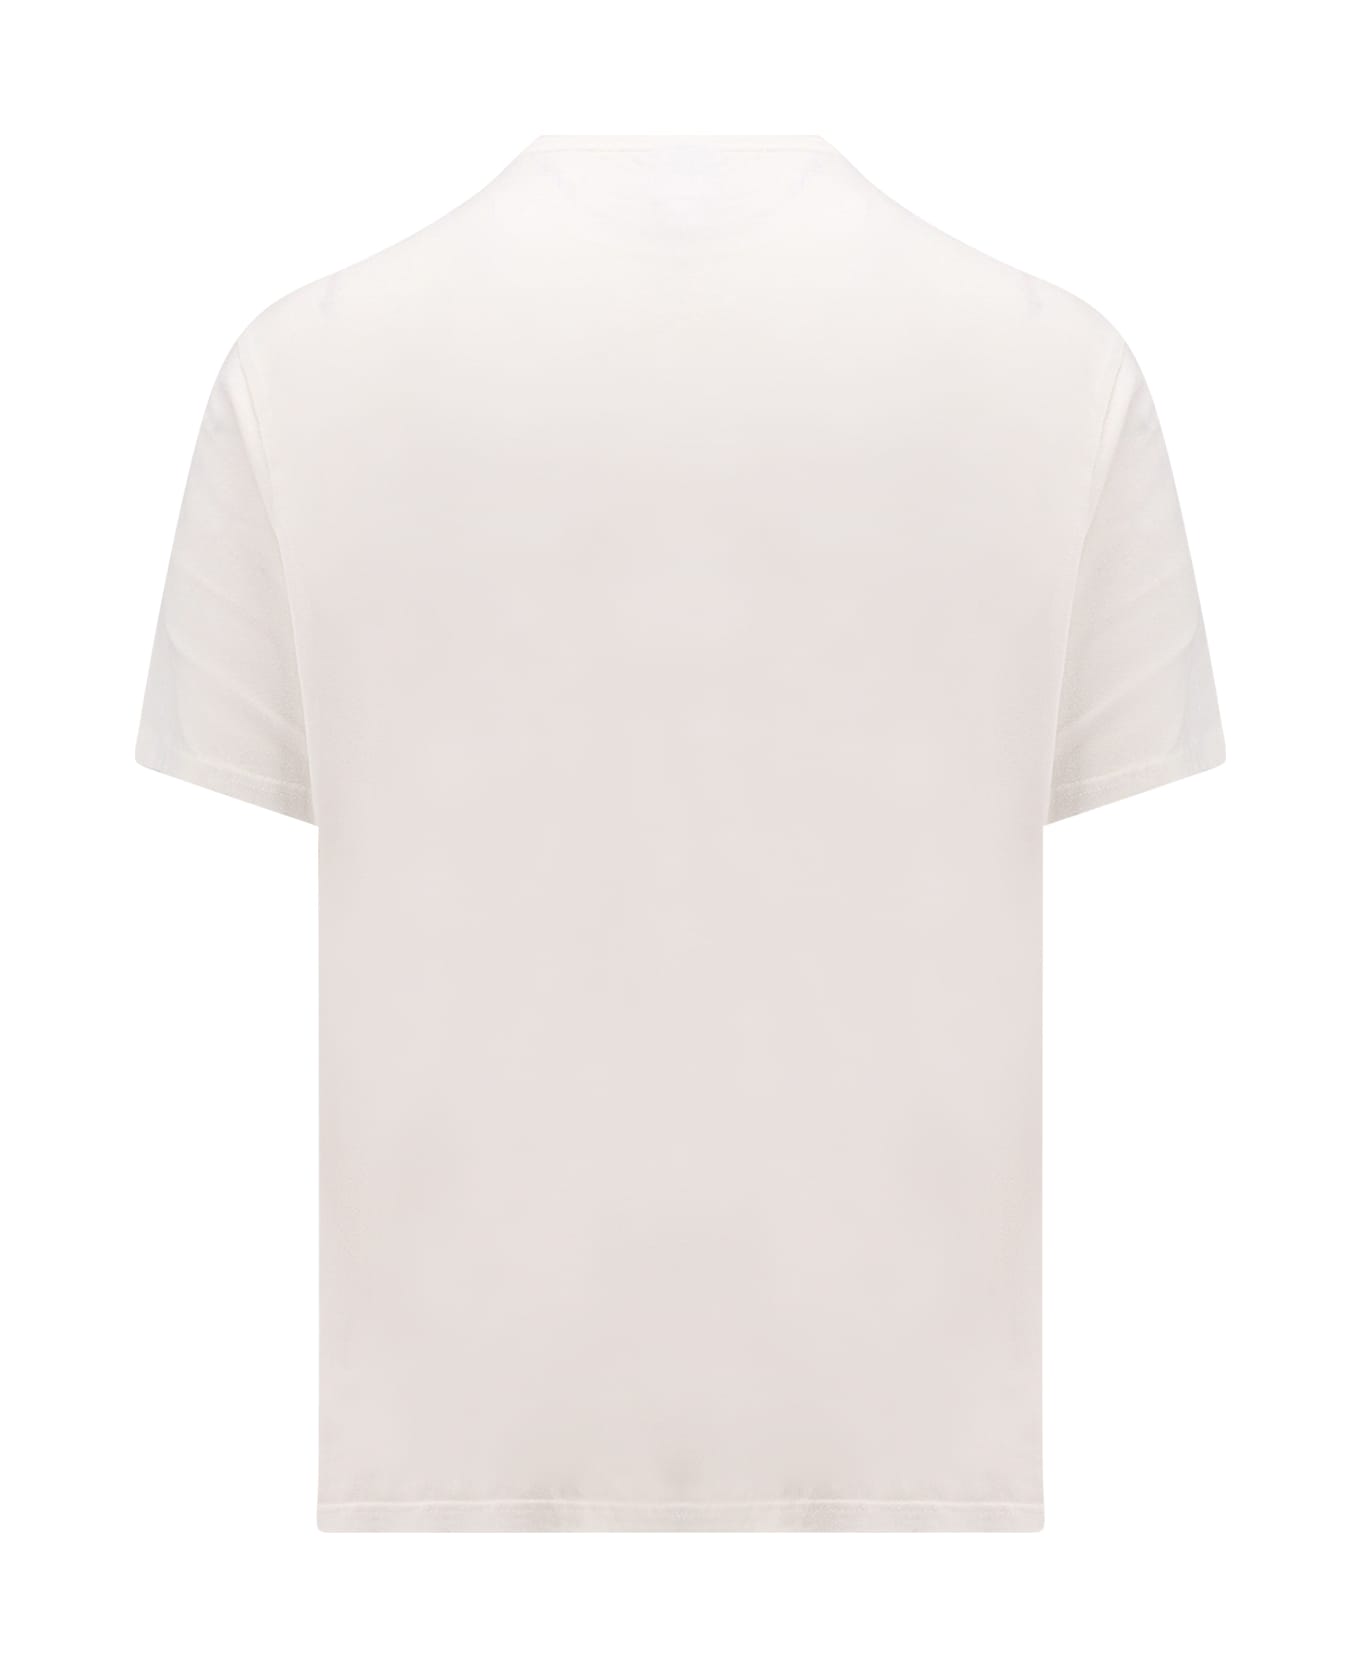 Dickies T-shirt - White シャツ